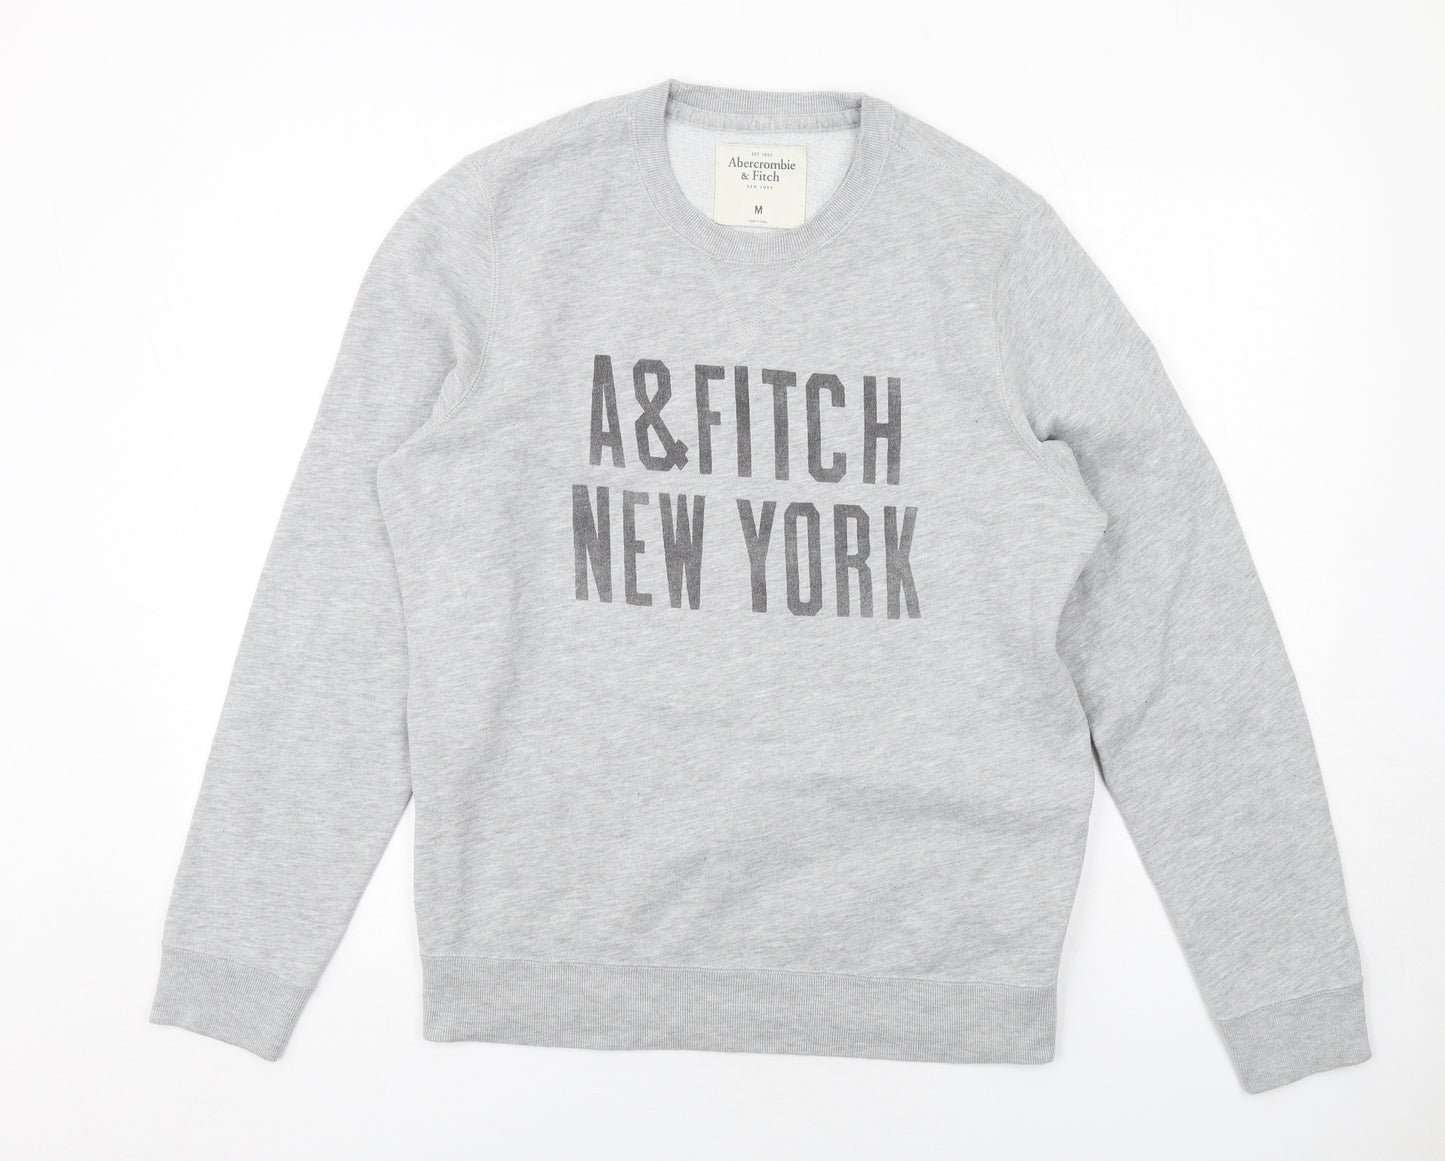 Abercrombie & Fitch Mens Grey Cotton Pullover Sweatshirt Size M